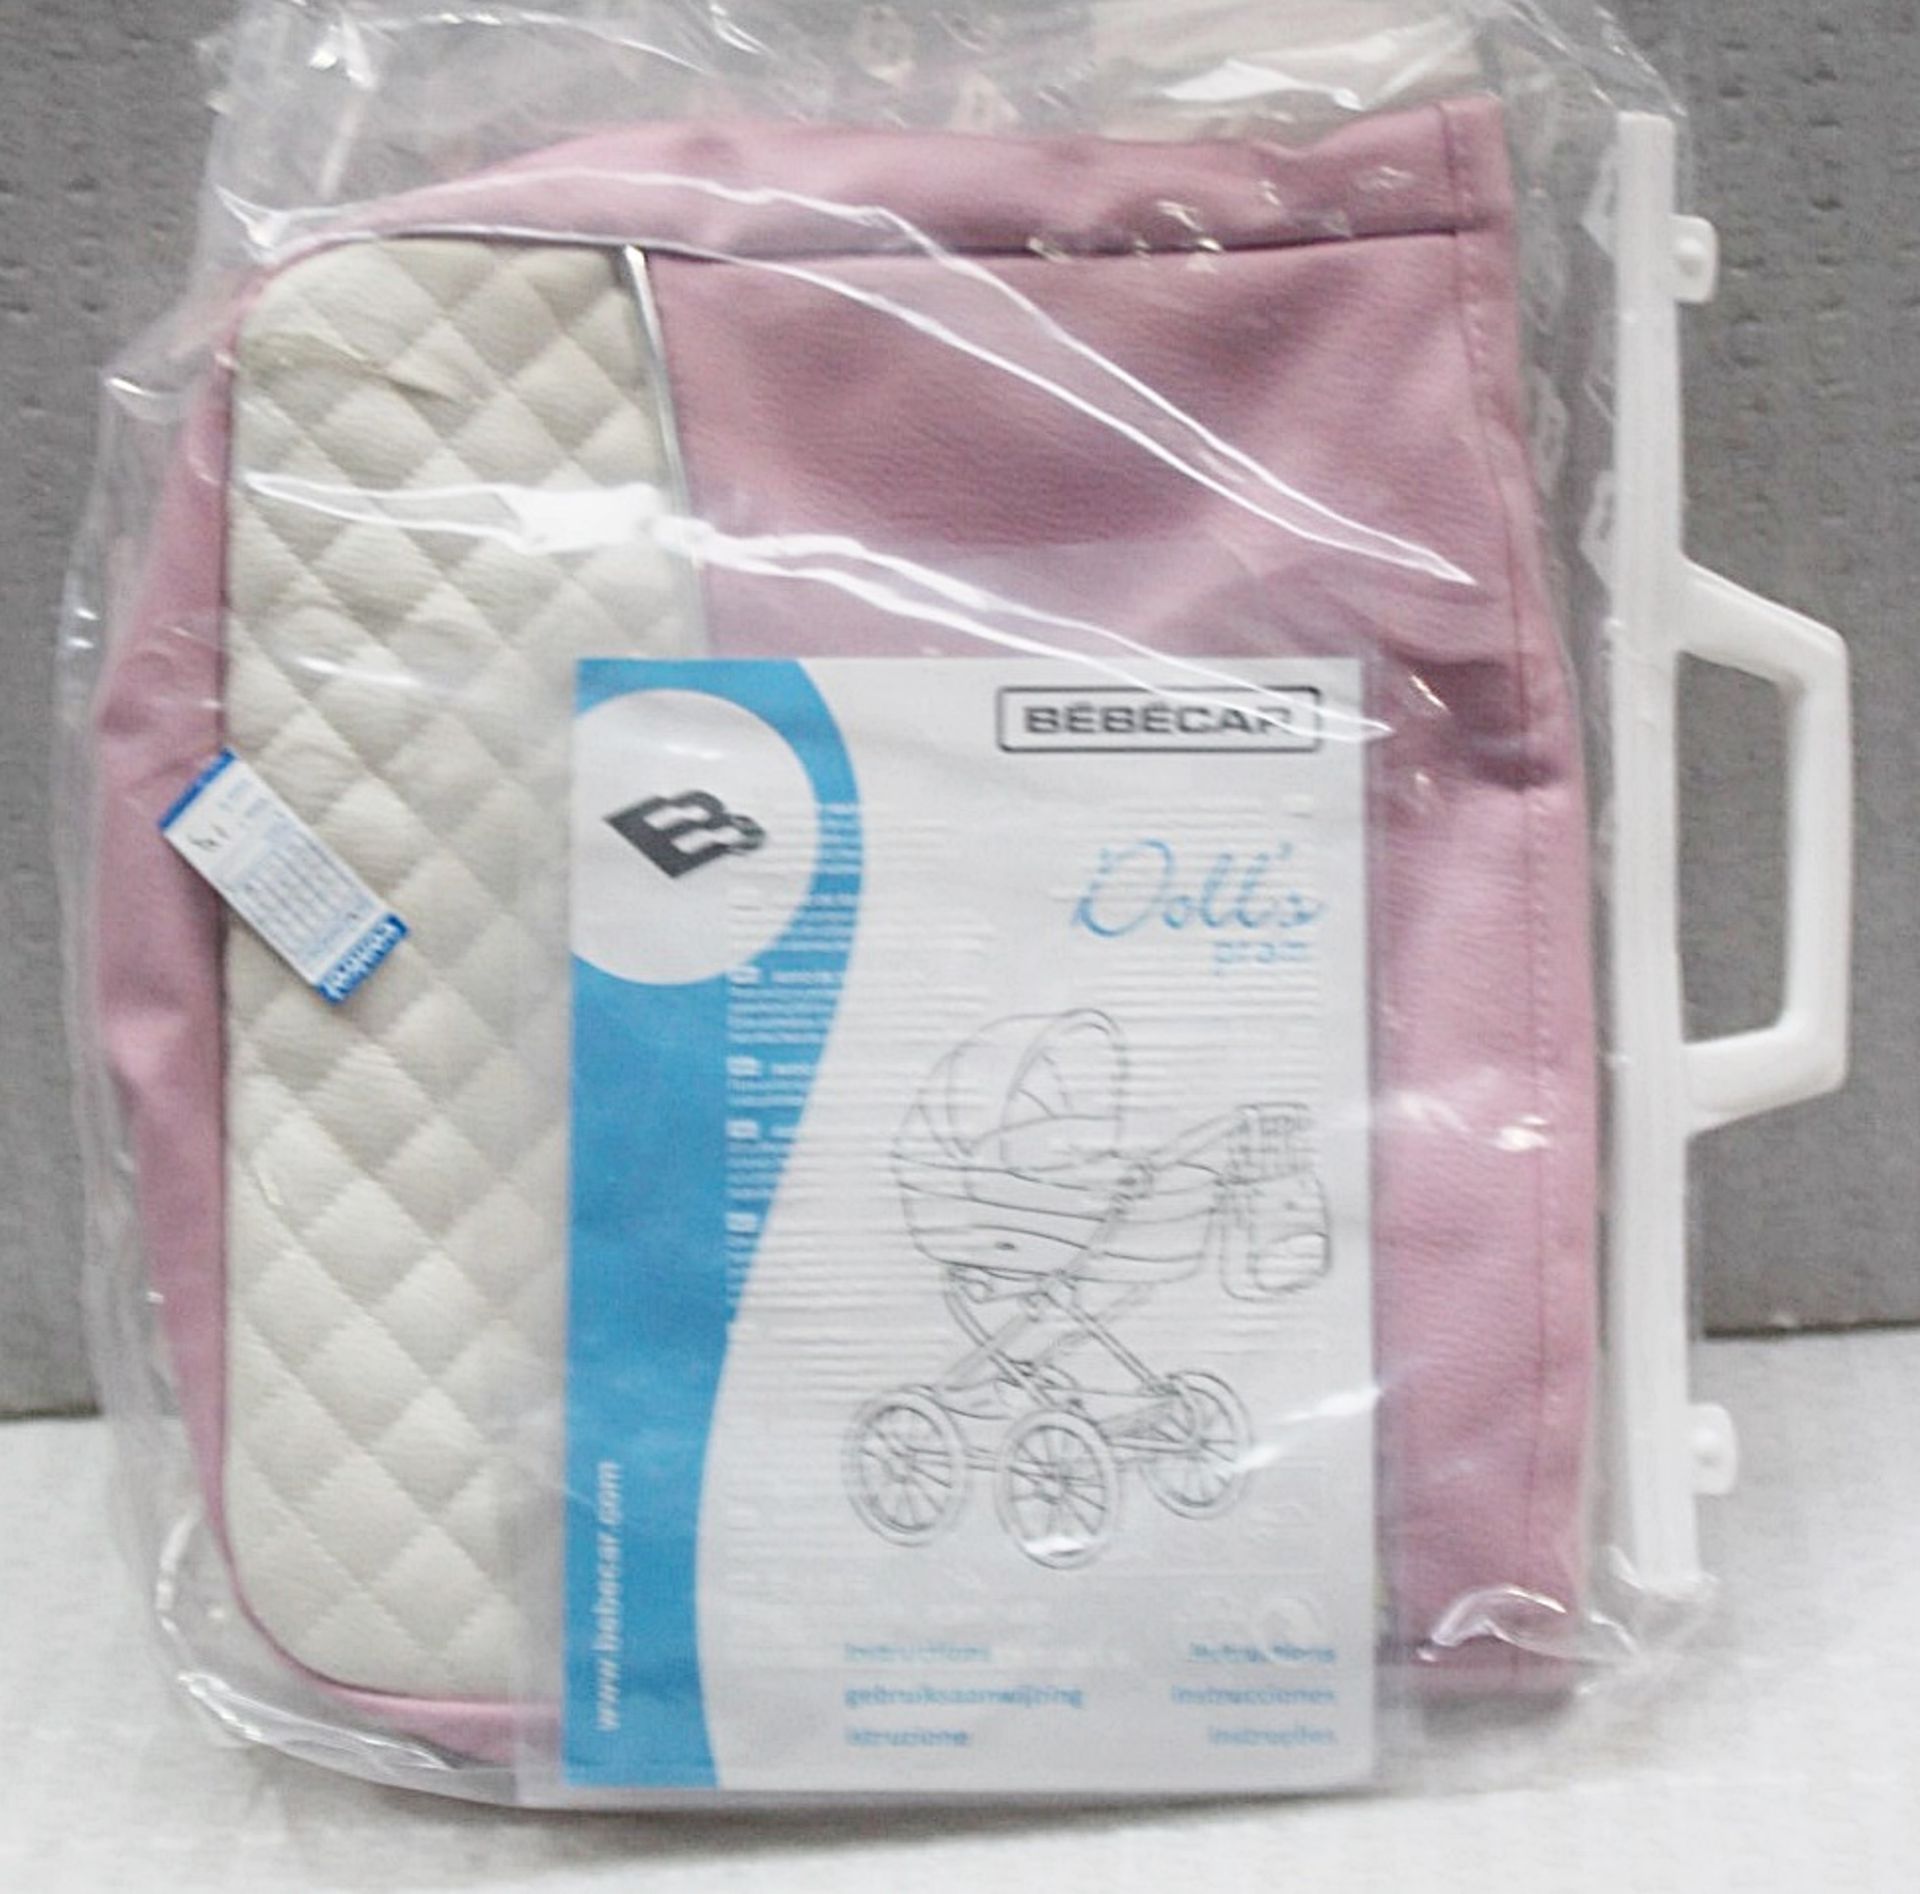 1 x BEBECAR 'Stylo' Premium Dolls Pram + Bag In Candy Pink - Original Price £325.00 - Image 13 of 13